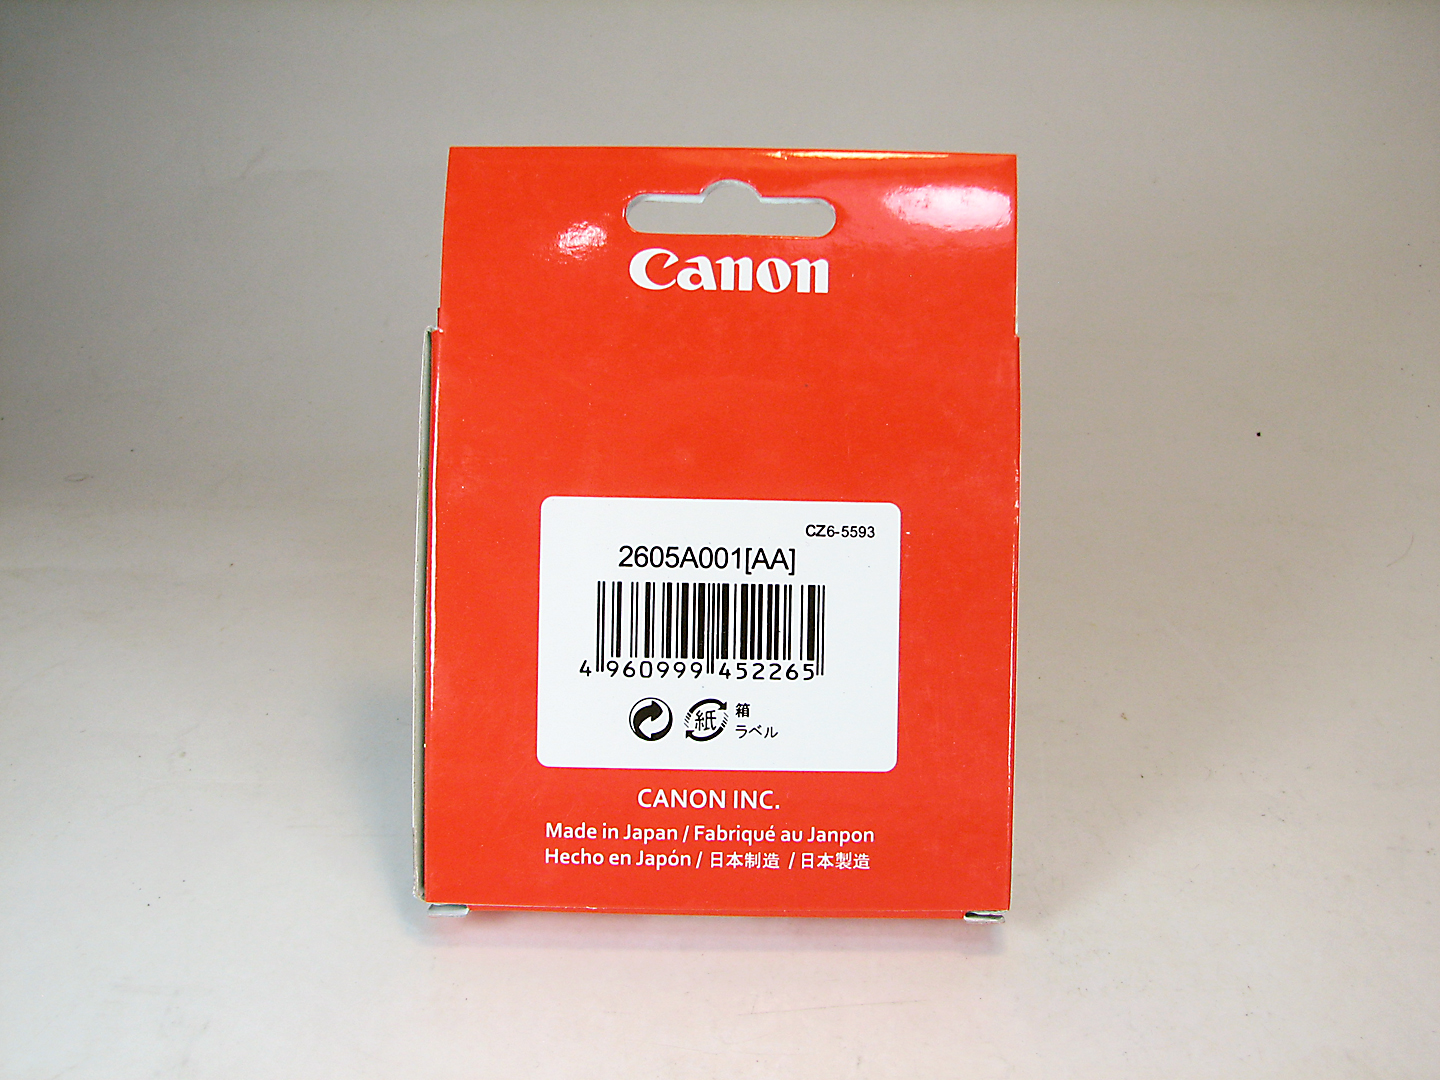 فیلتر آکبند Canon ND4 72mm